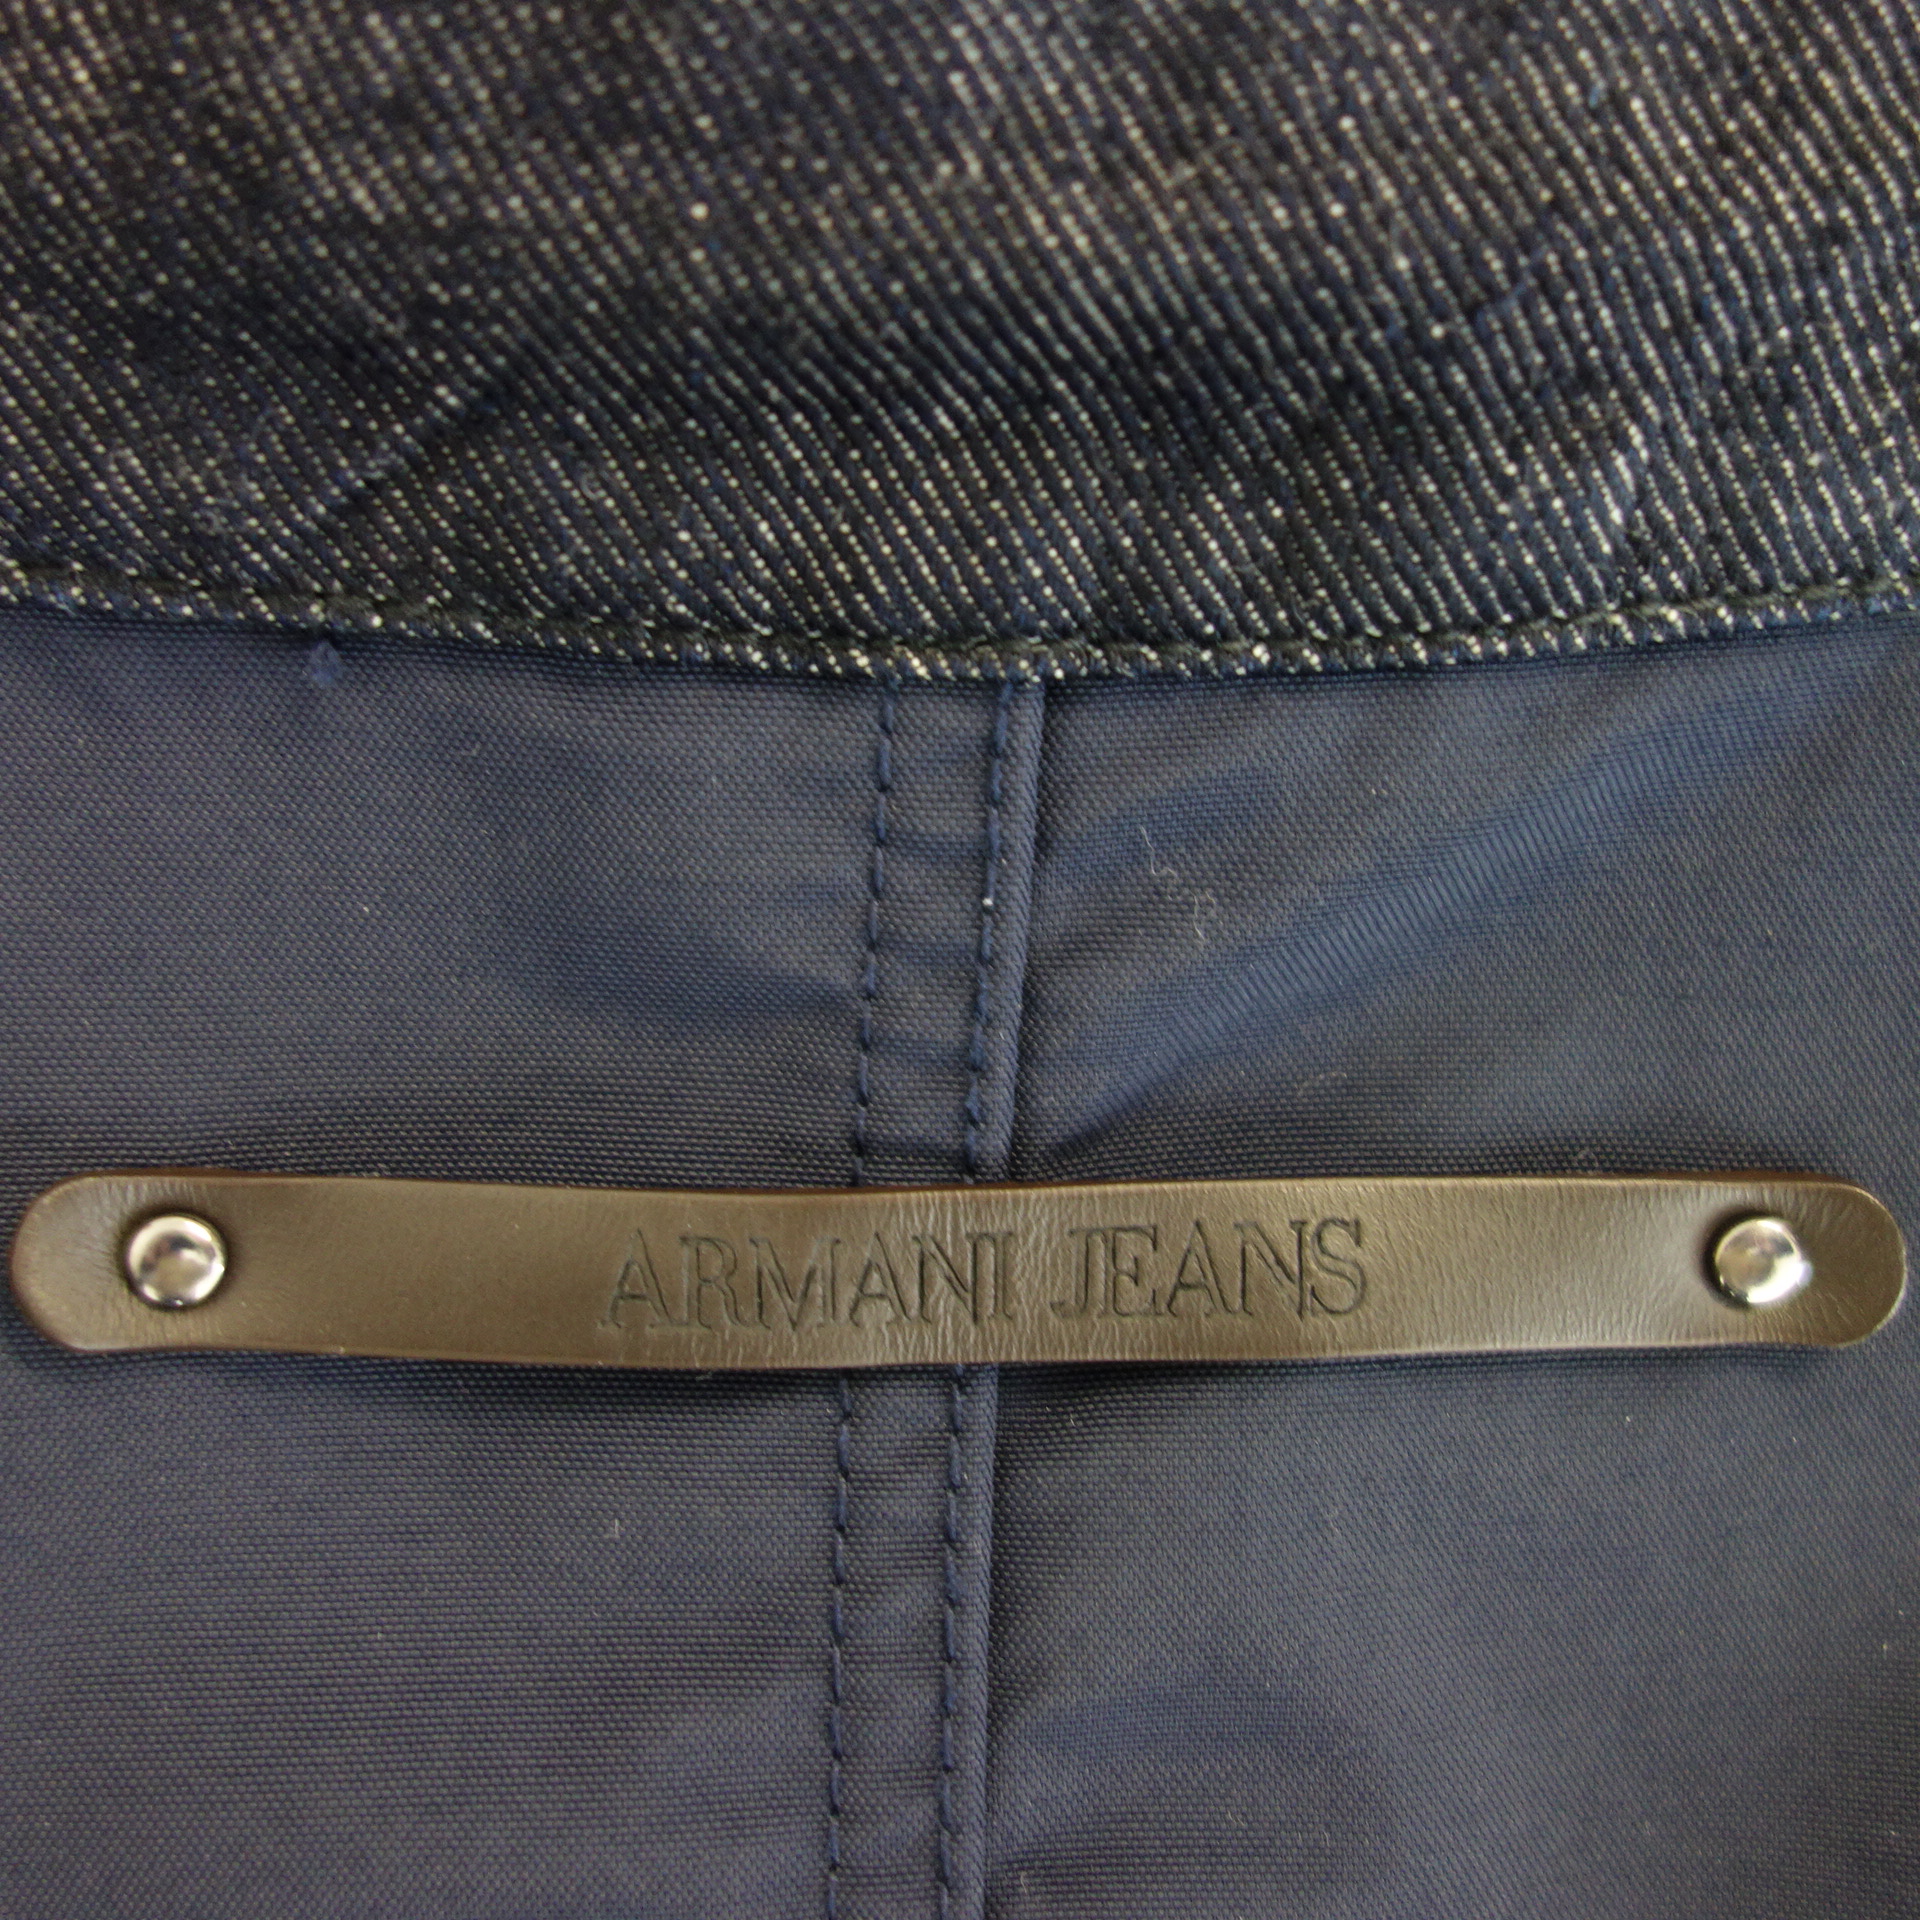 ARMANI Jeans Herren Übergangsjacke Jacke Anorak Parka Blau Größe 52